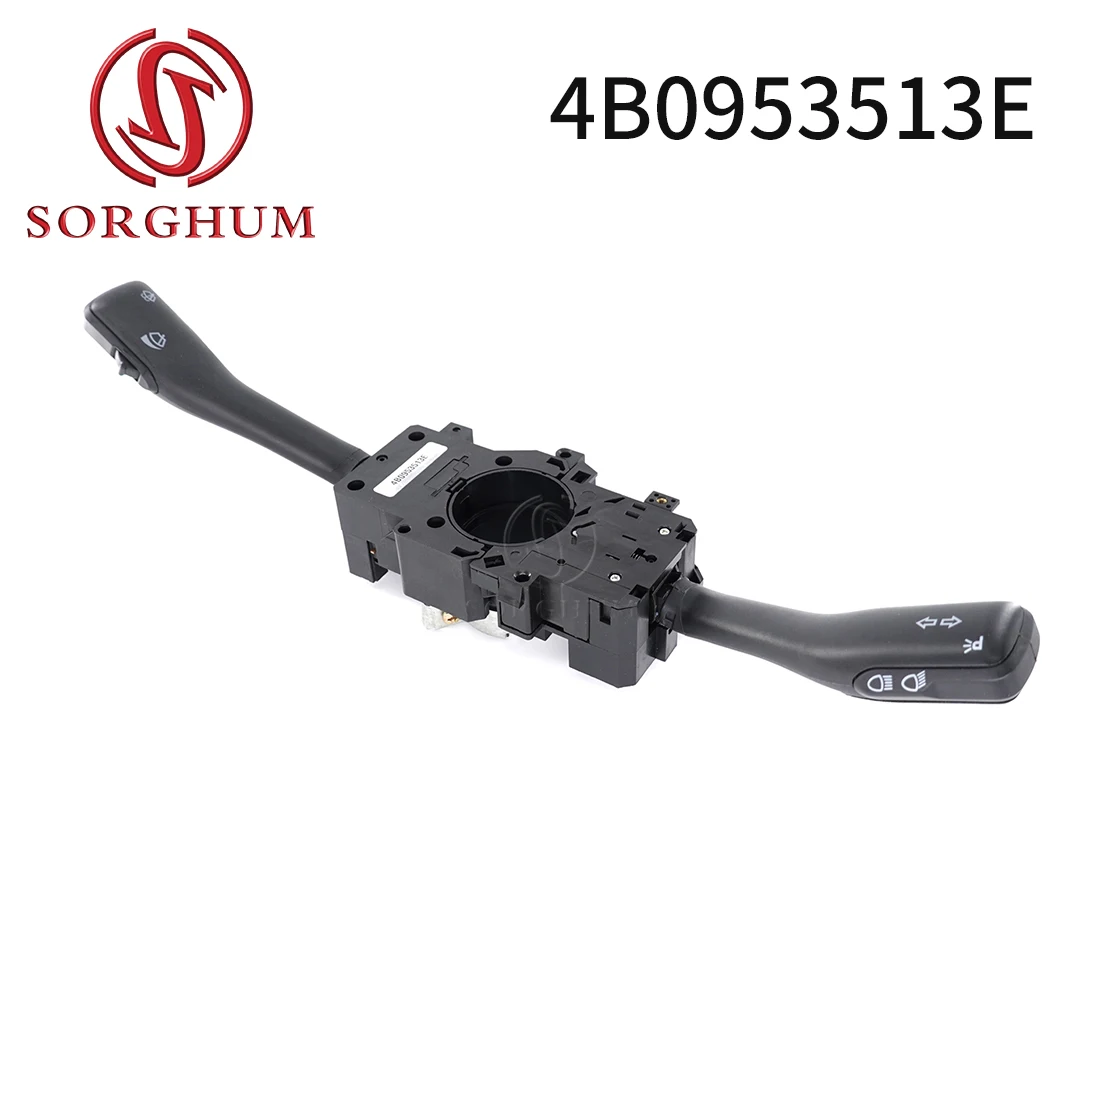 

SORGHUM 4B0953513E For Volkswagen VW Bora Passat B5 B5.5 Golf MK4 Combination Switch Control Windshield Wiper & Light Car Part